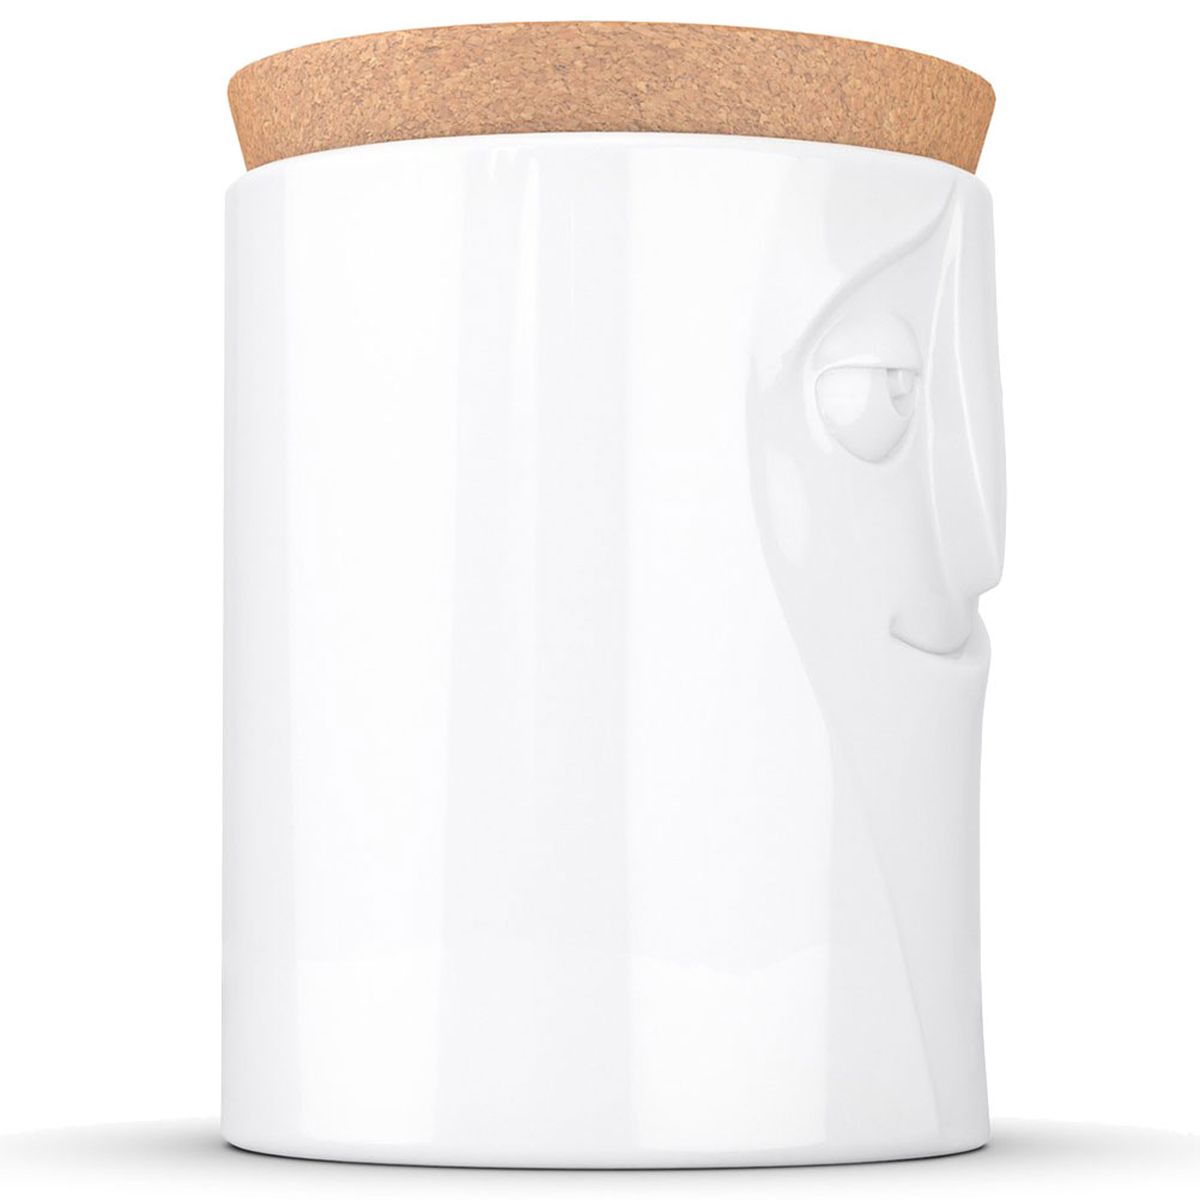 Tassen Charming Porcelain Food Container